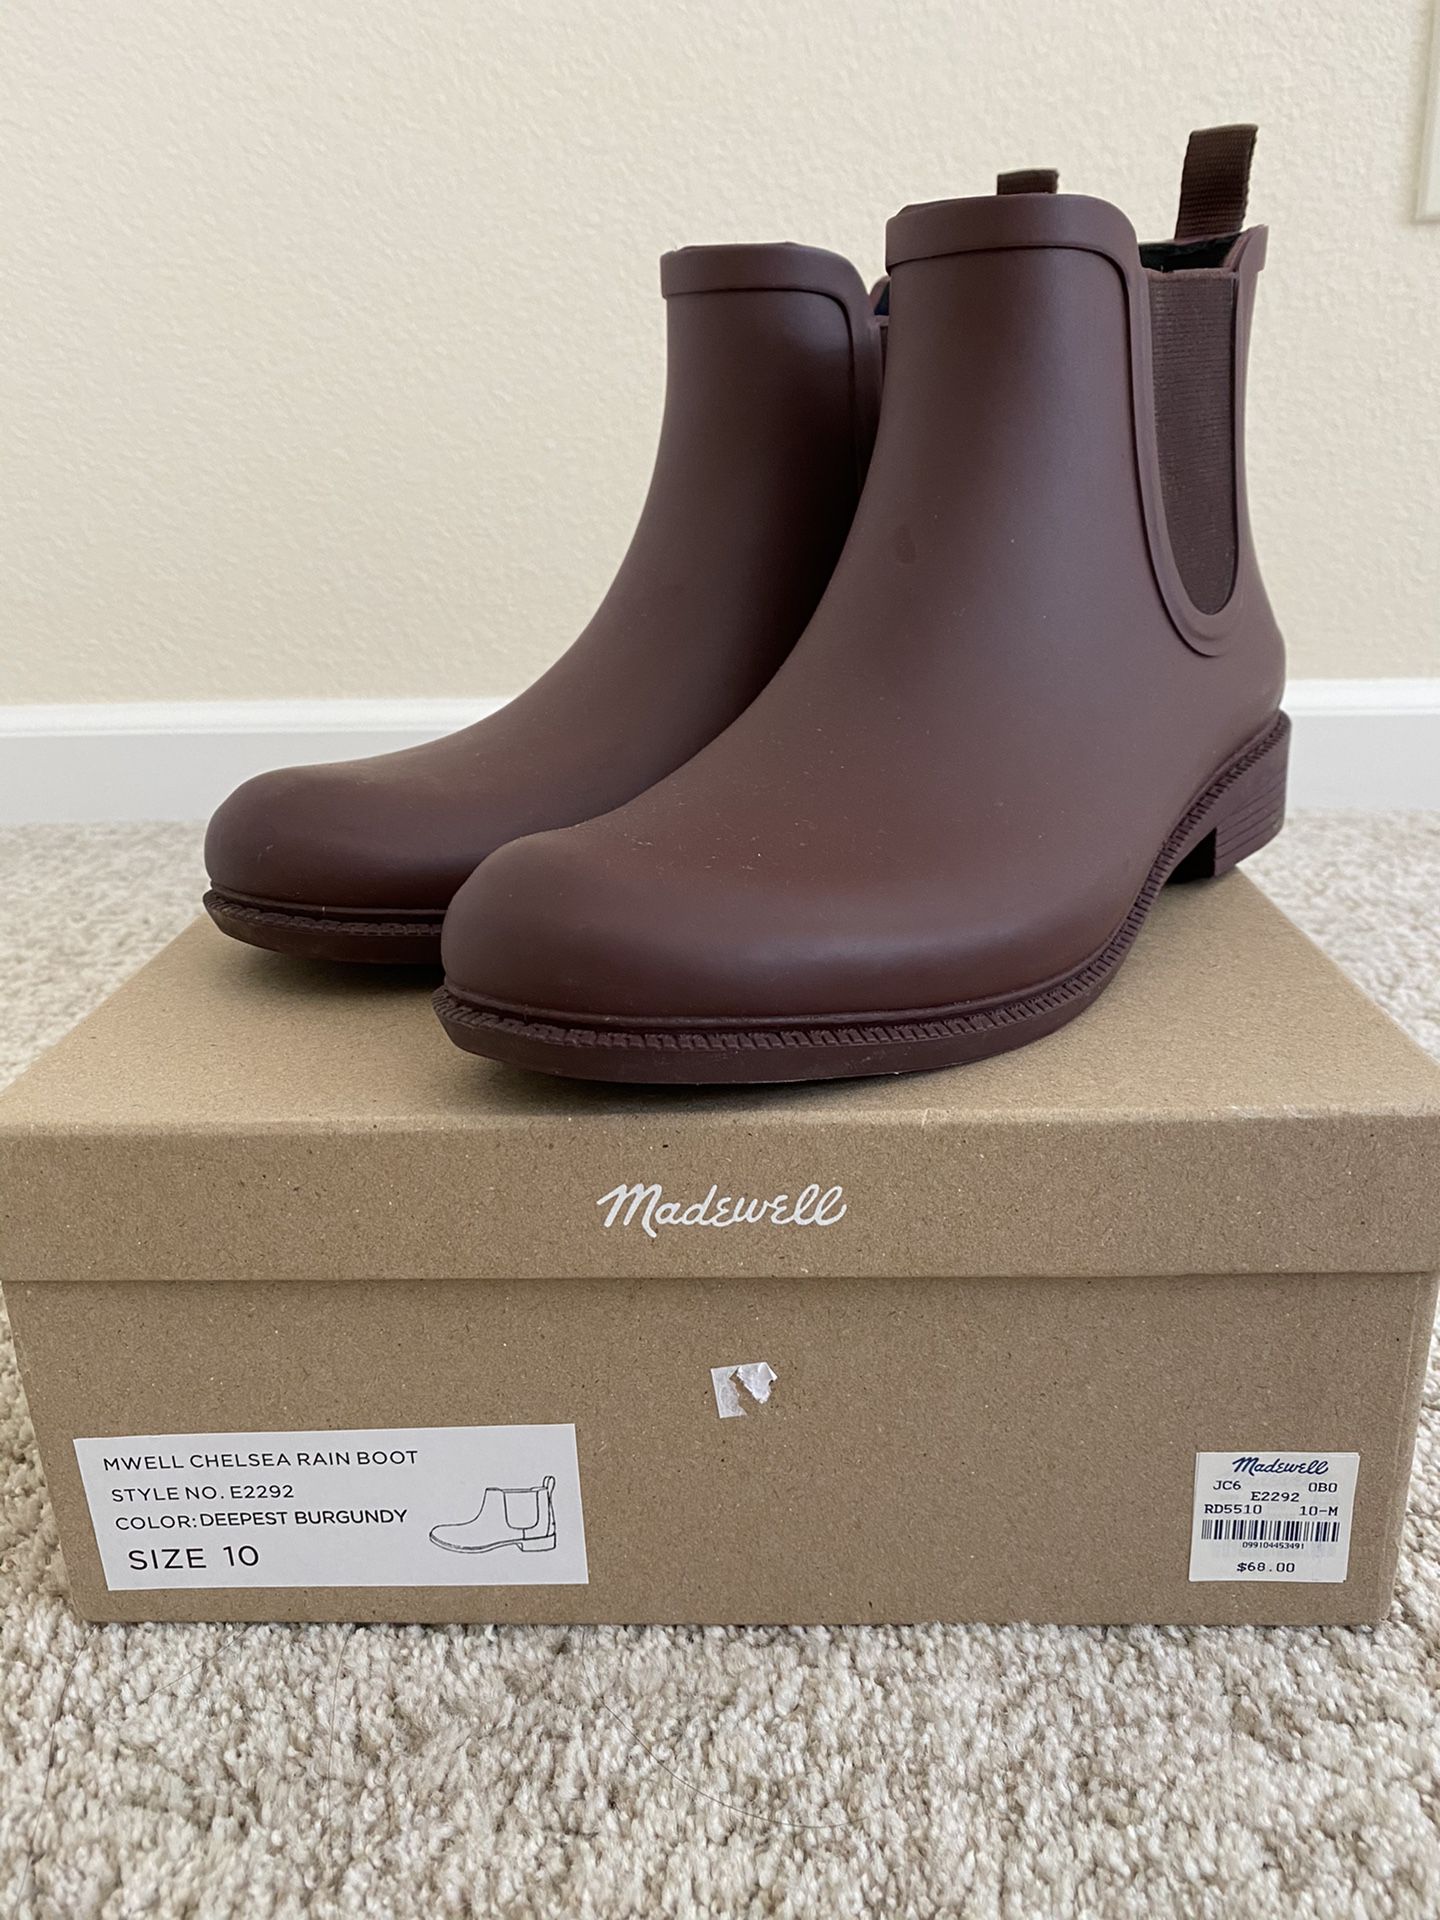 Madewell women’s Chelsea rain boots/booties. Size 10